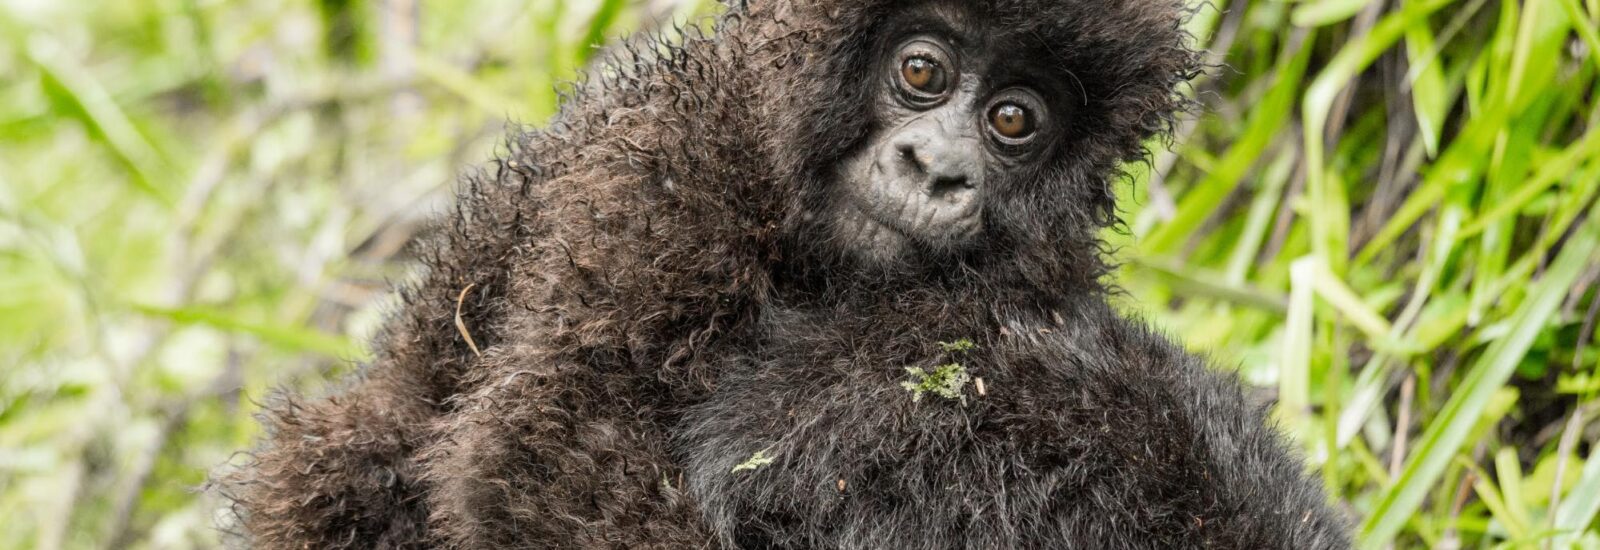 Uganda Gorilla Trekking Permits